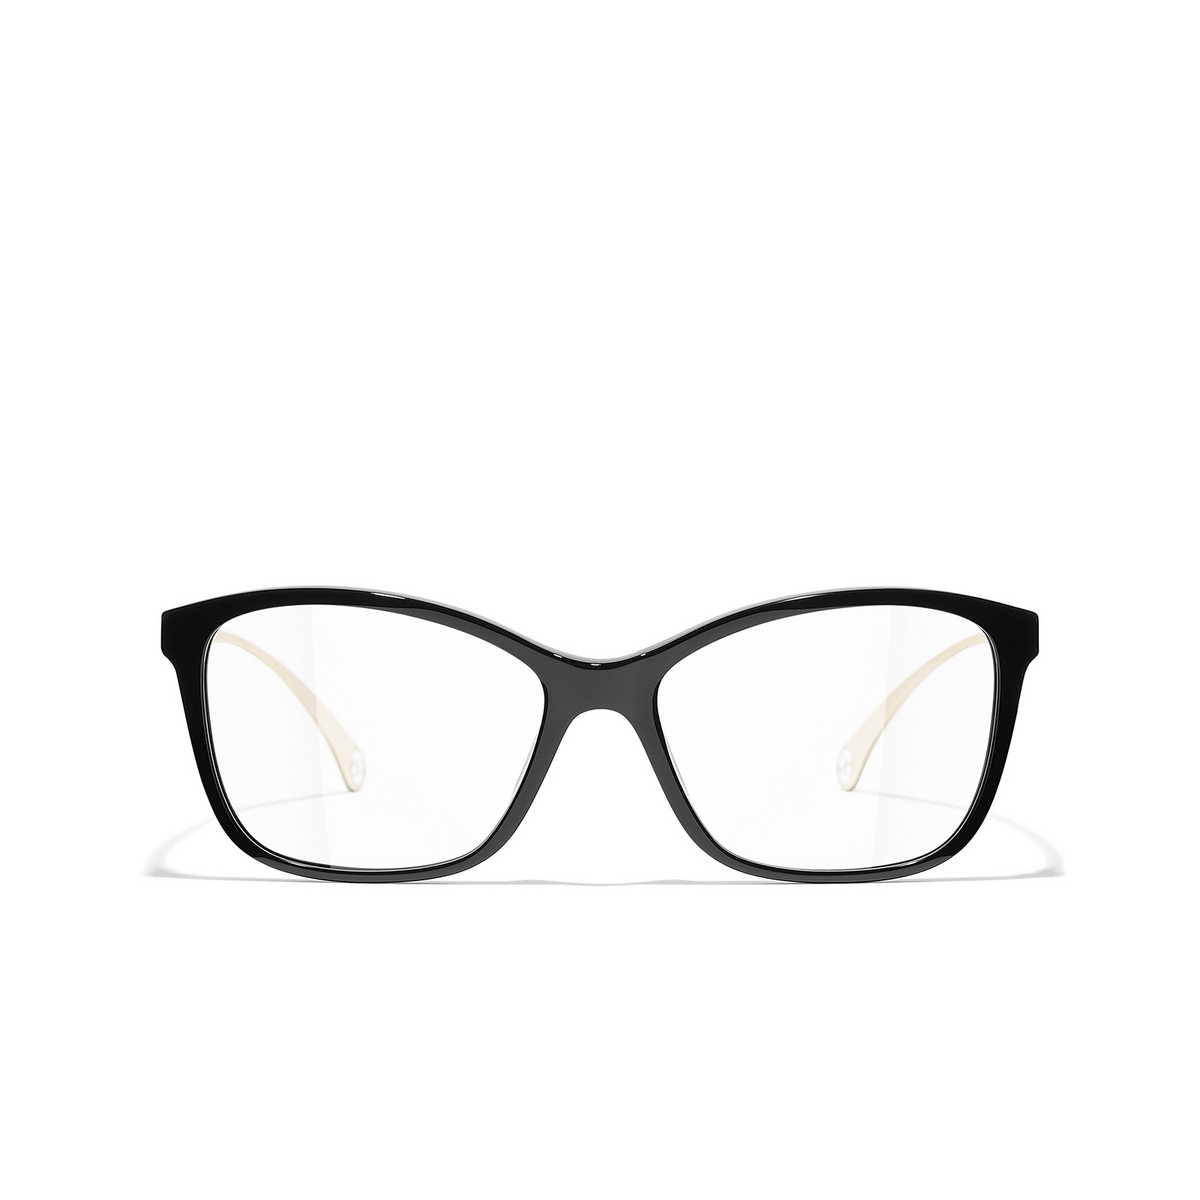 CHANEL rectangle Eyeglasses C501 Black - front view